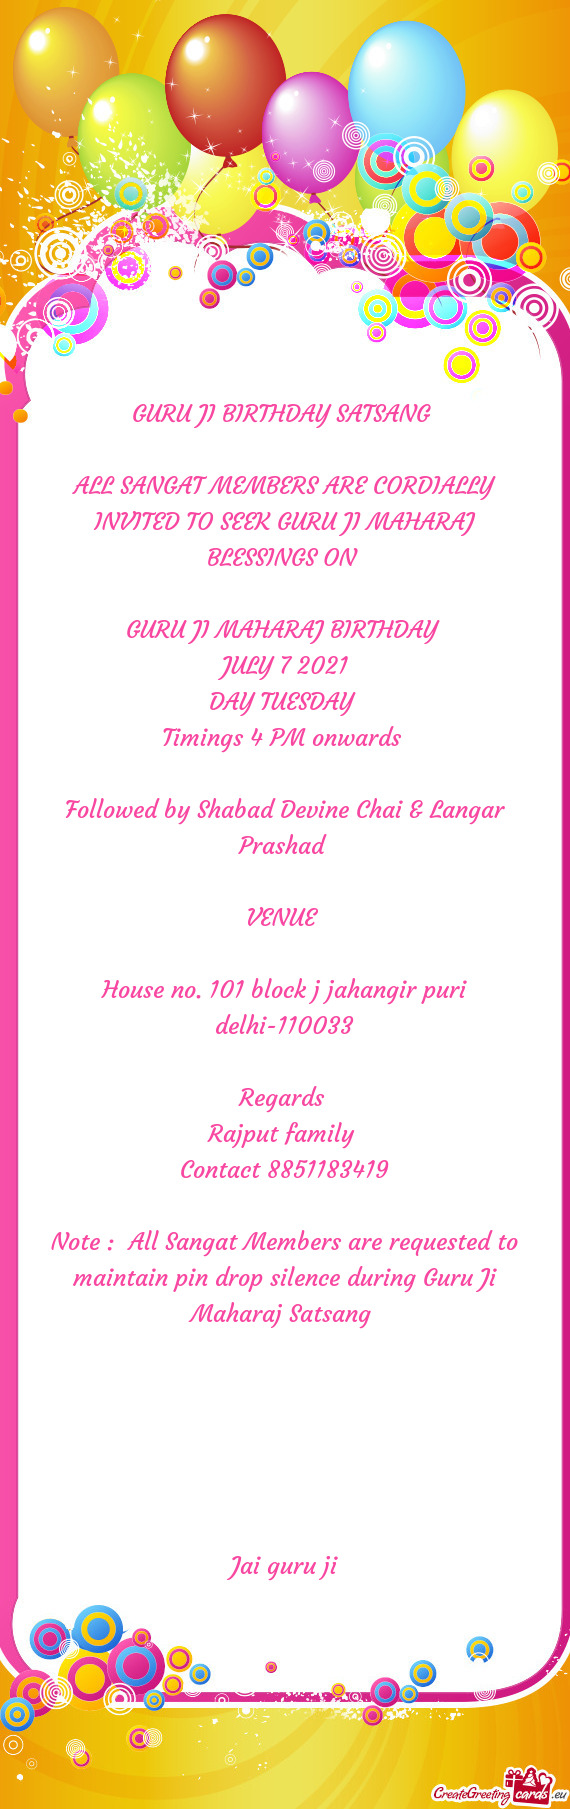 House no. 101 block j jahangir puri delhi-110033